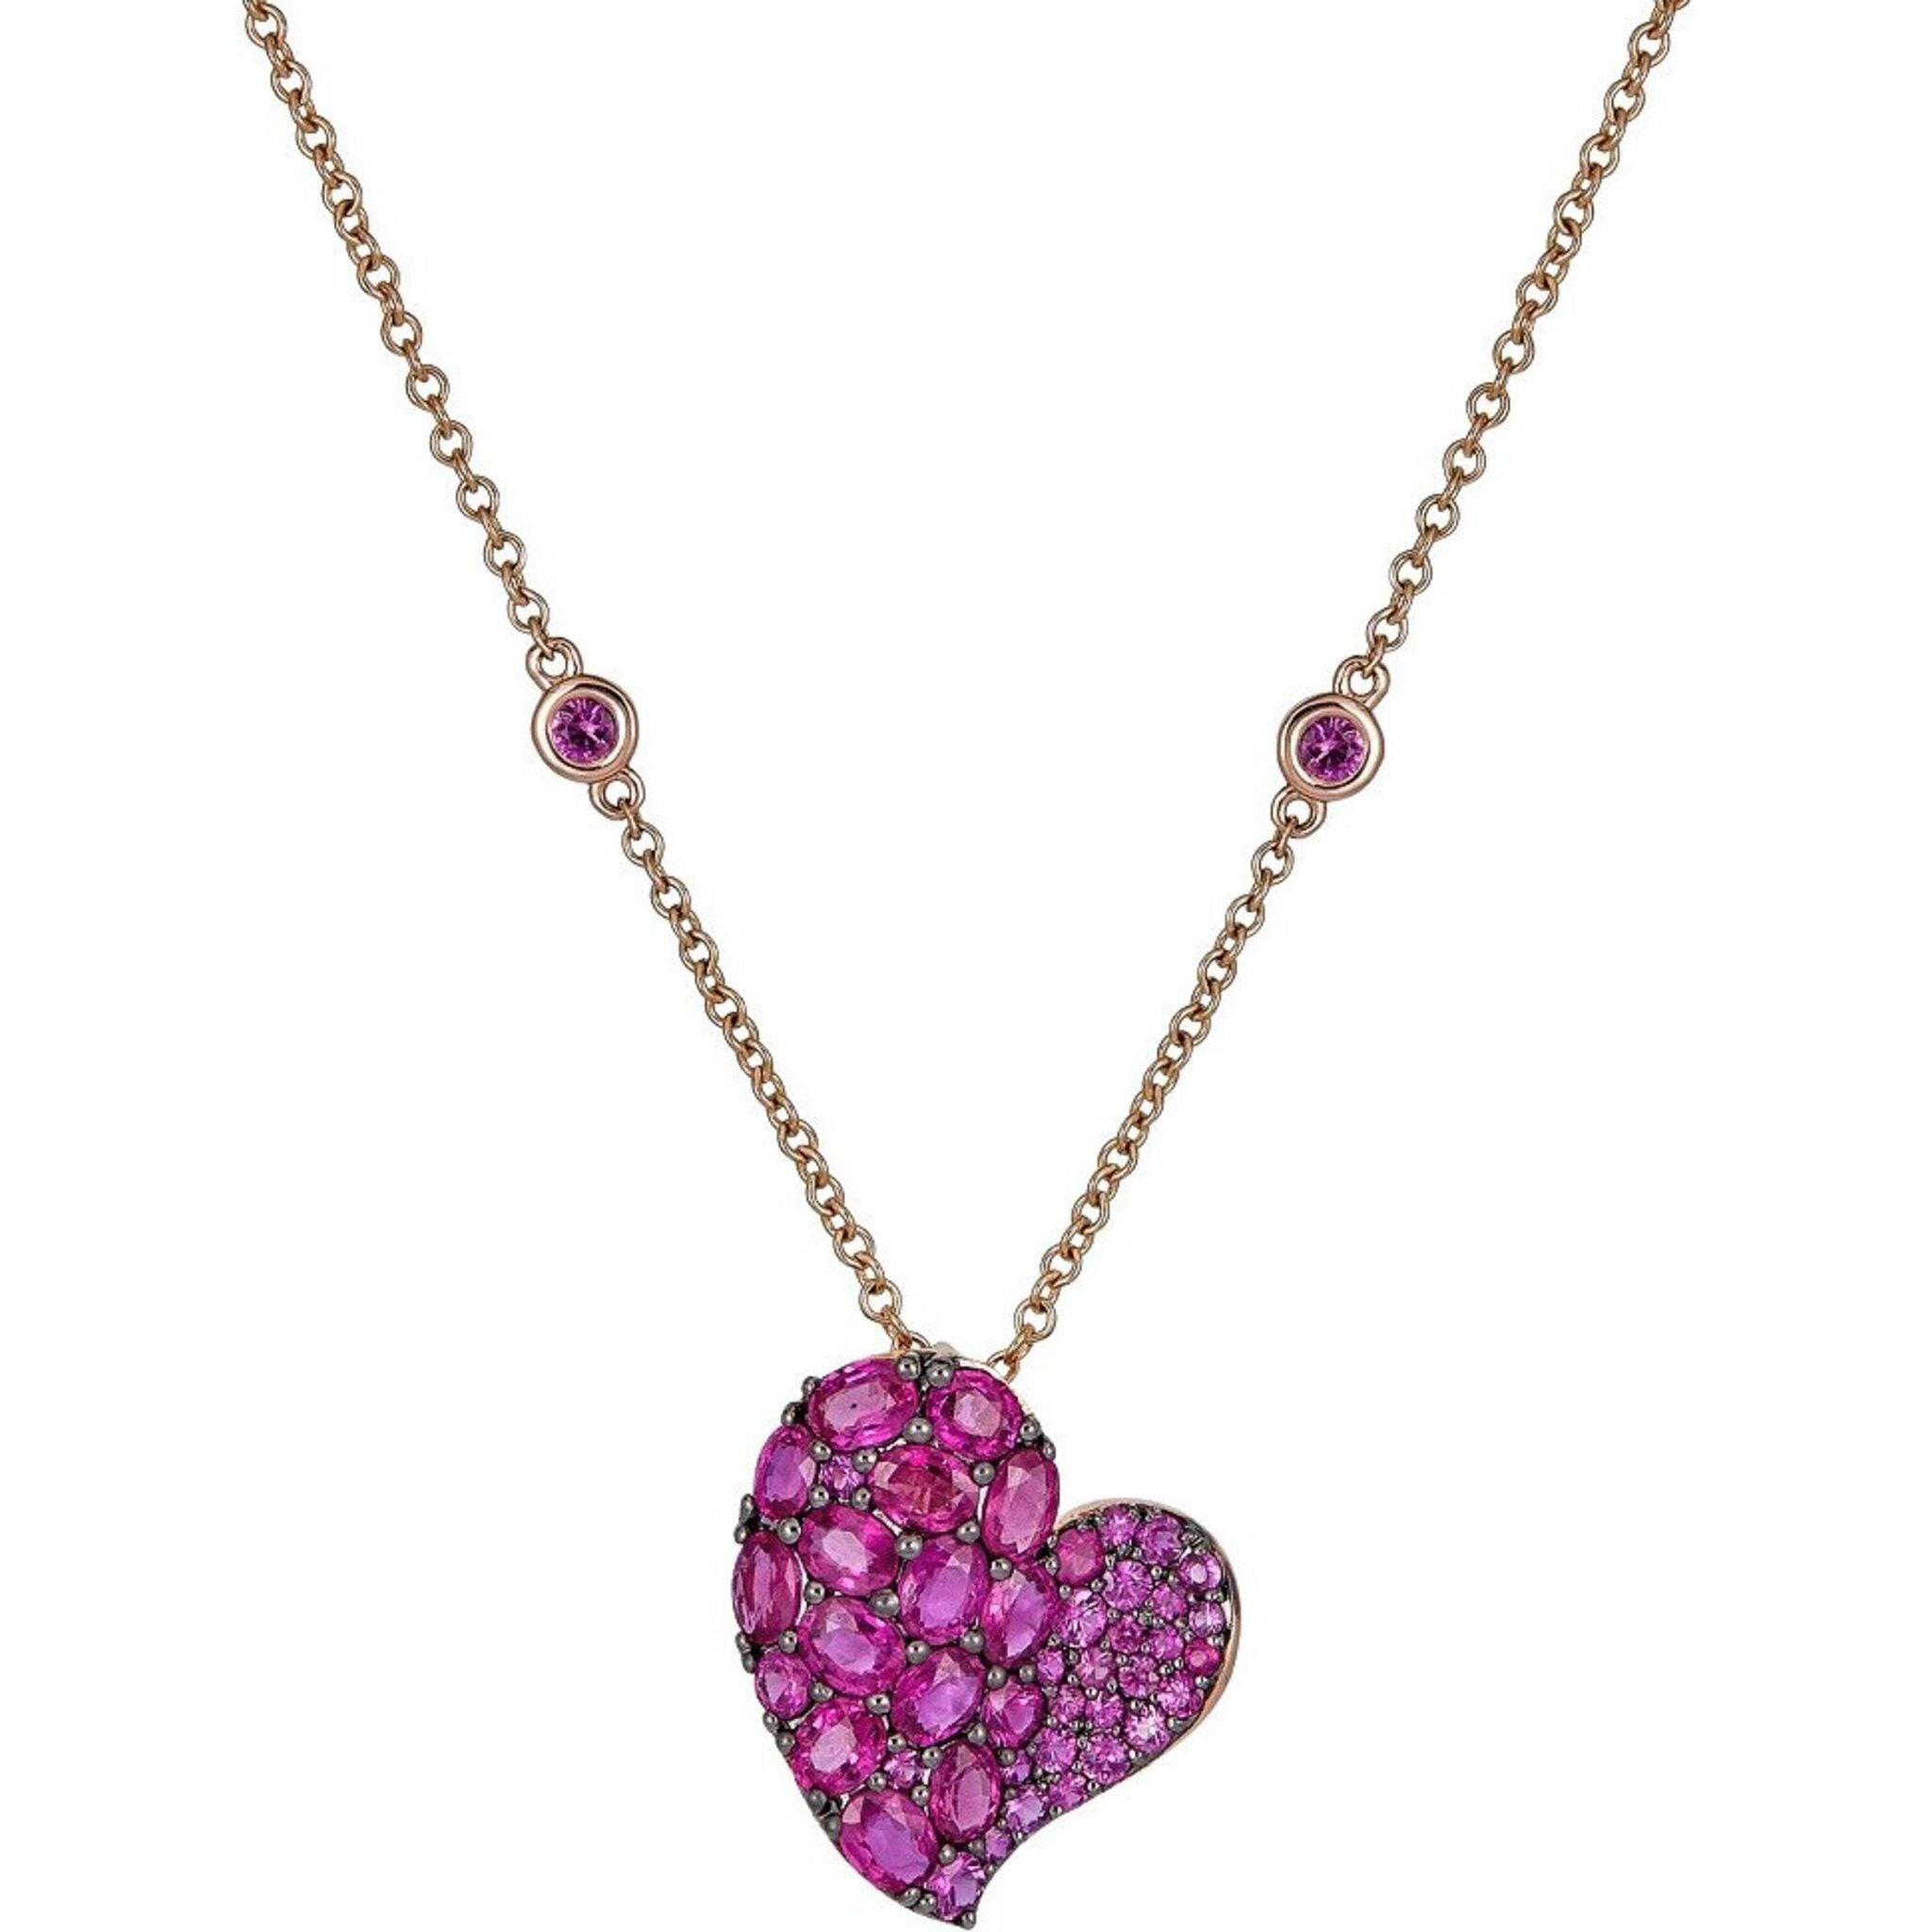 SWAROVSKI Pink Heart Necklace Pendant Crystal Silver Chain Women | eBay